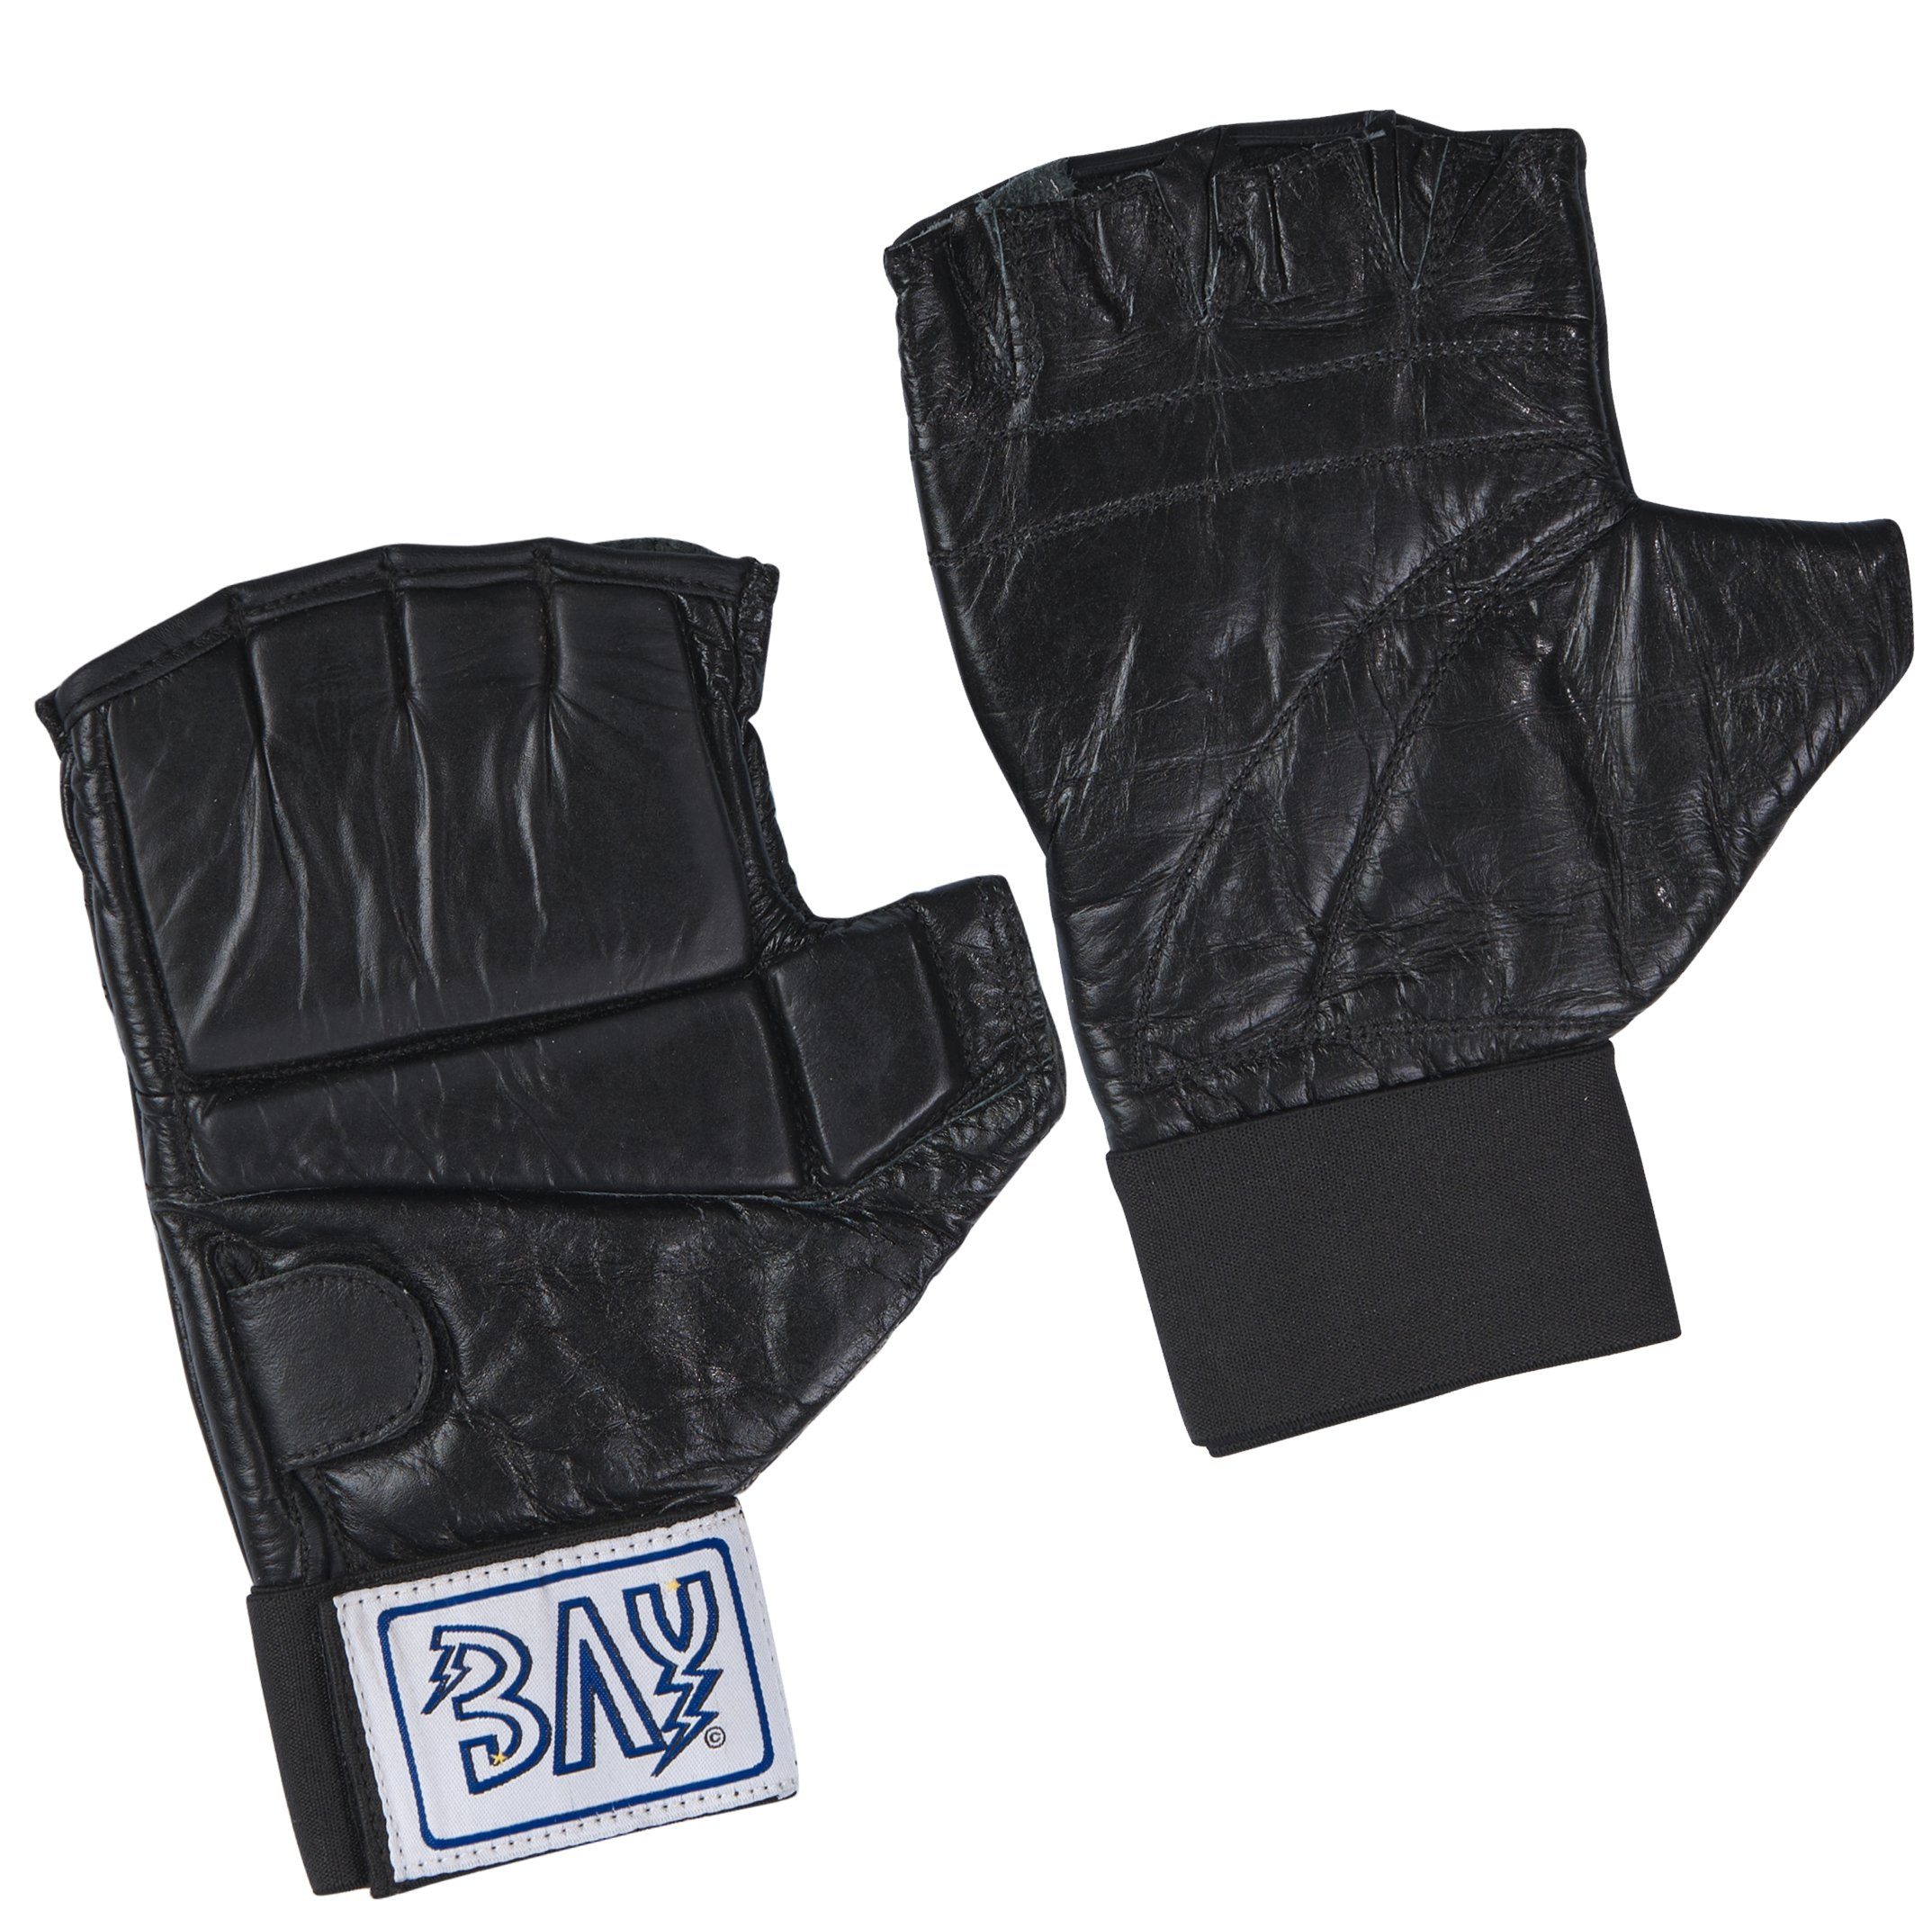 Sport Kampfsportausrüstung BAY-Sports Sandsackhandschuhe Gel Leder Boxhandschuhe Boxsack Sandsack Handschut, Gel Pad Polsterung 